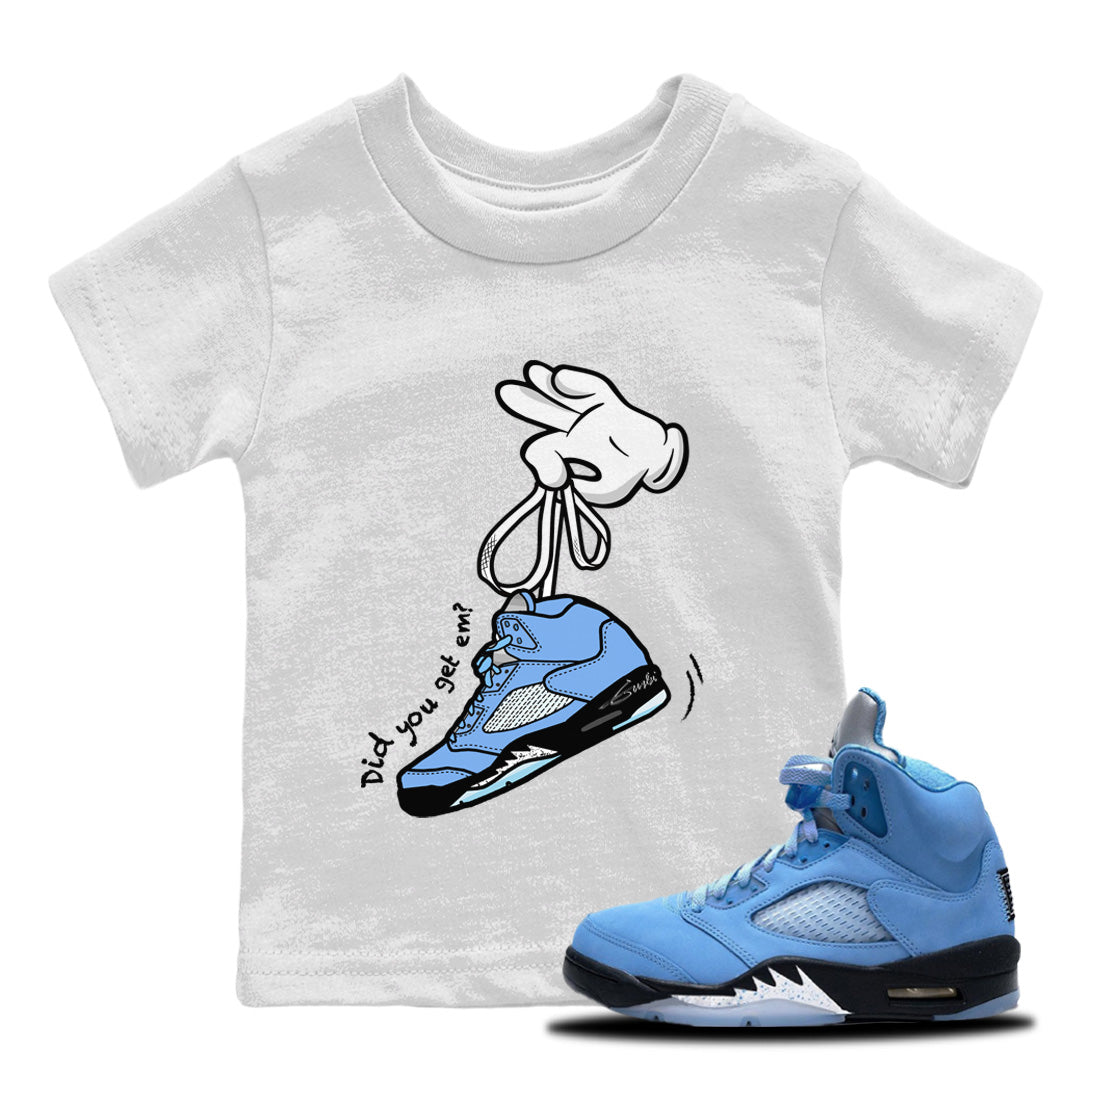 Shirt for Jordan 6 Retro UNC White University Blue Matching Sneaker Tee